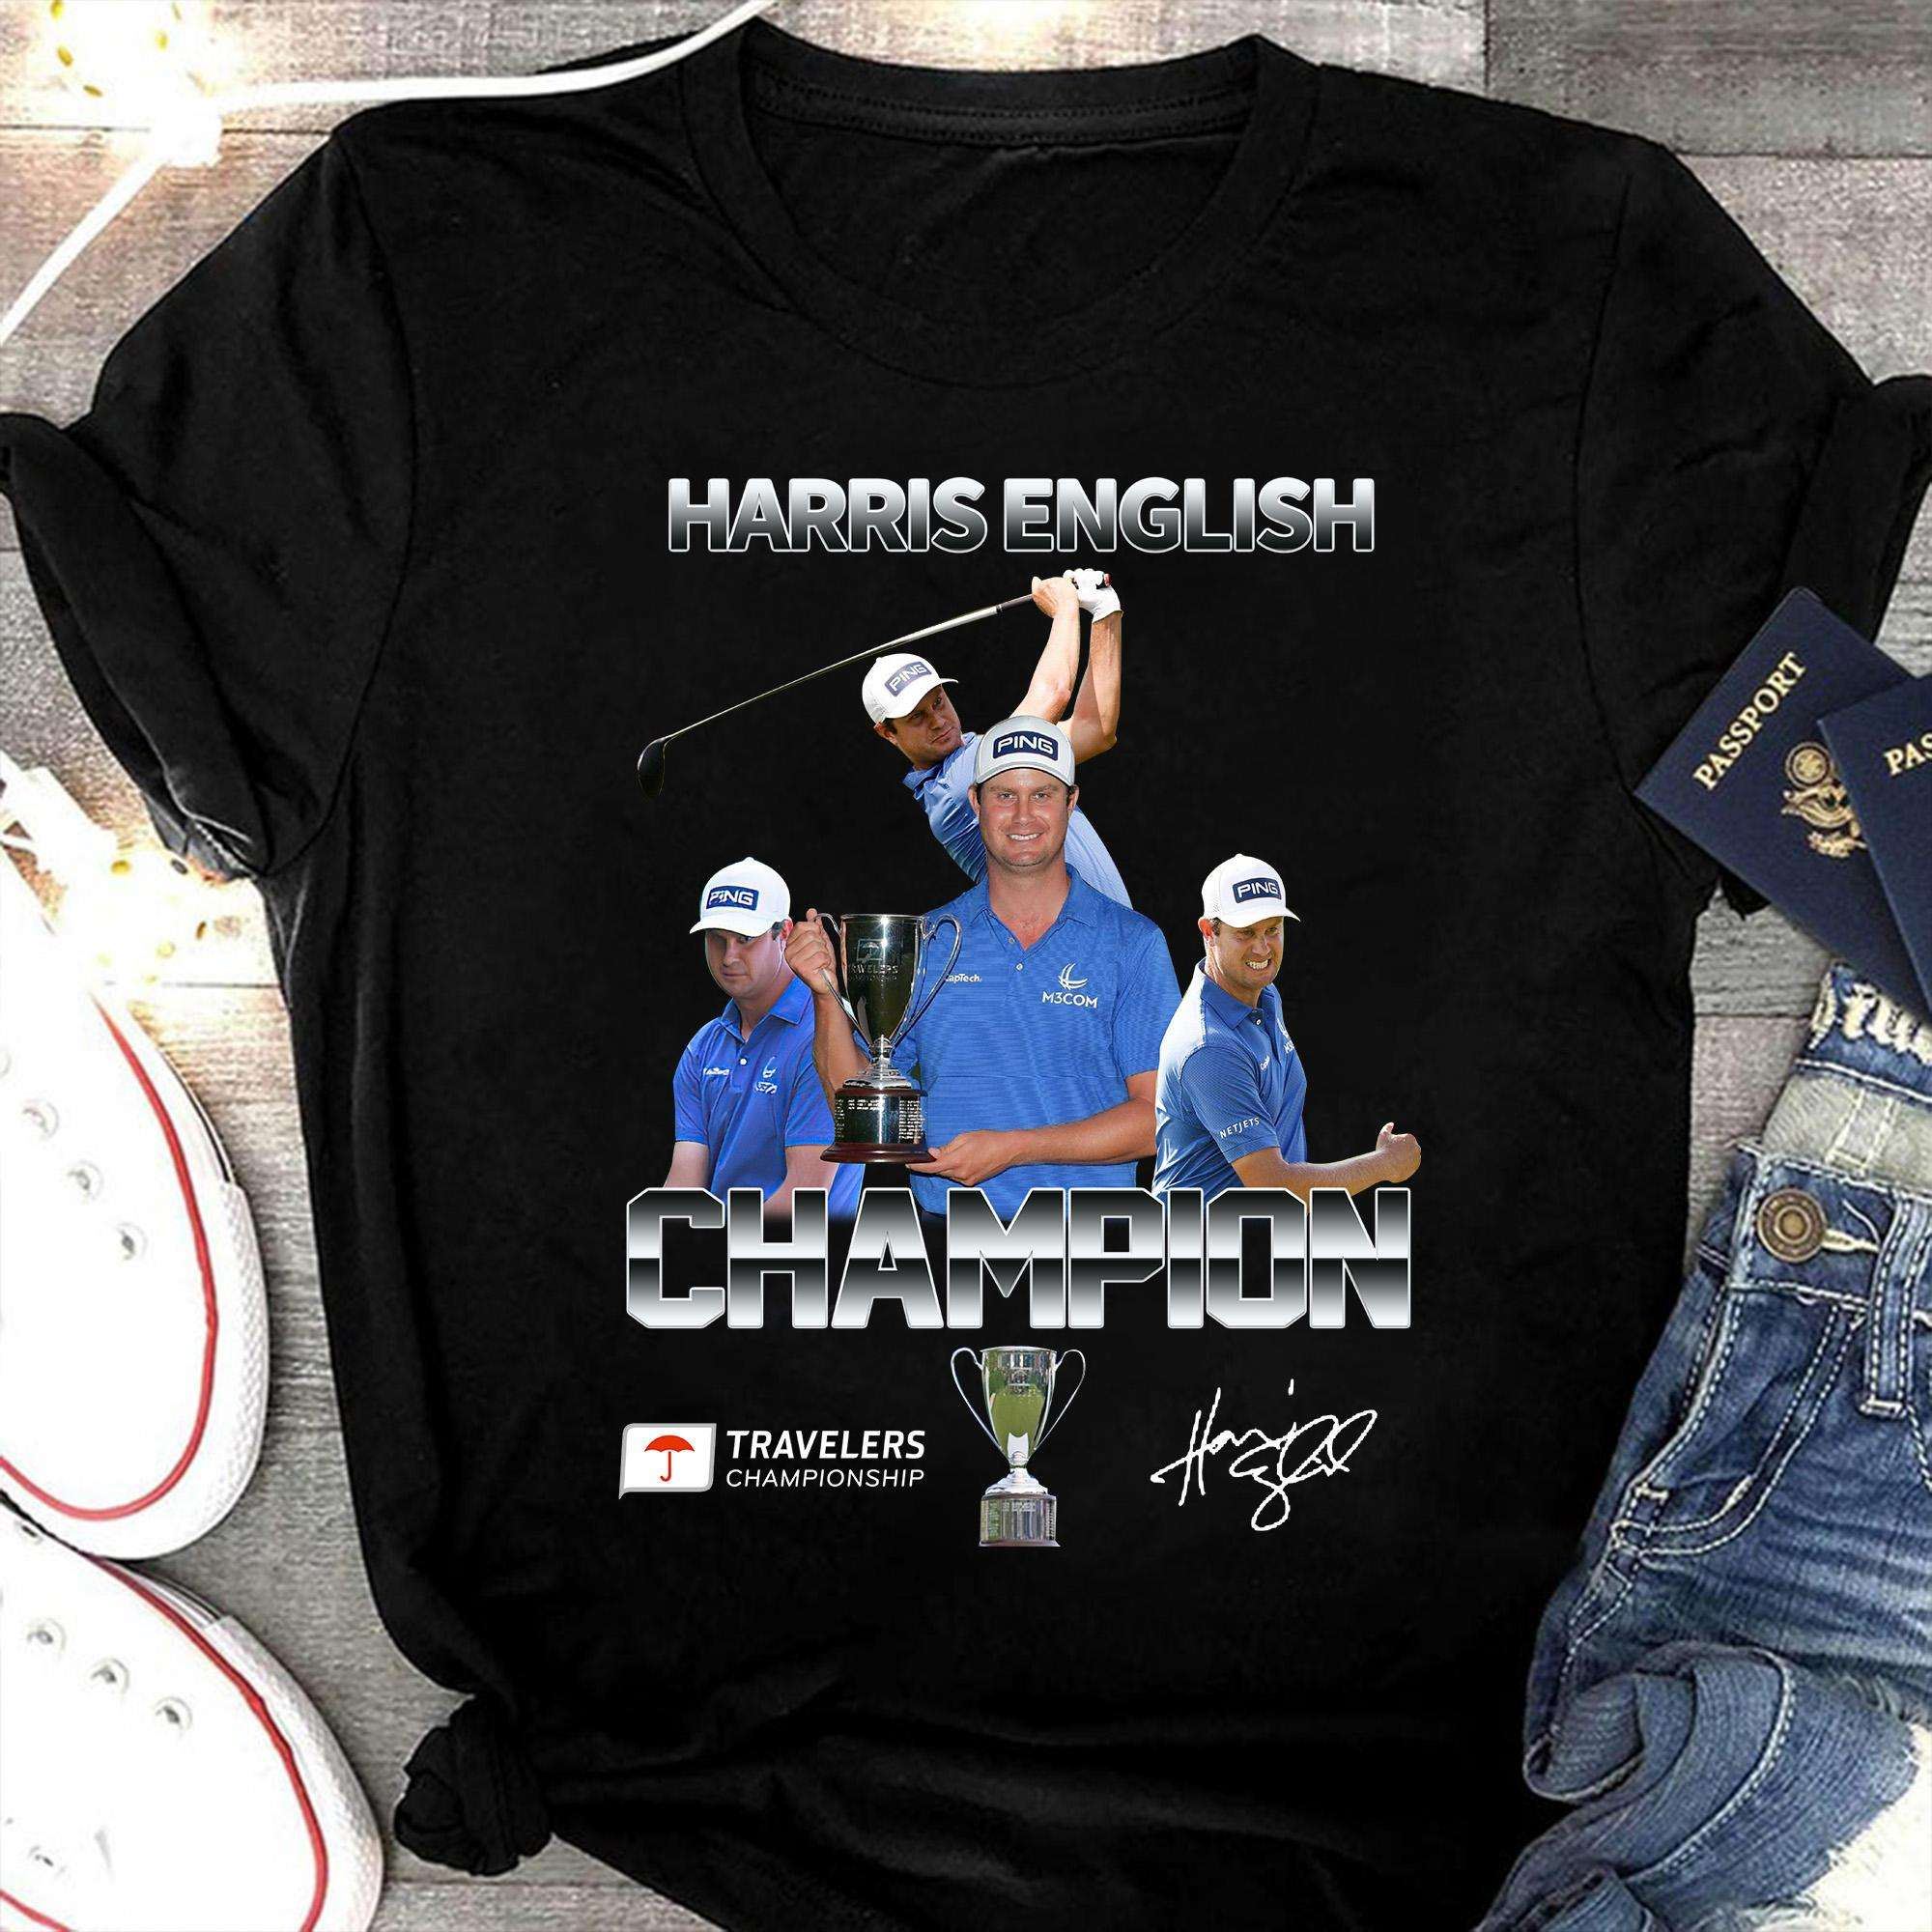 Harris English Travelers Championship Pga Tour Golf Classic Unisex T Shirt Size Up To 5xl